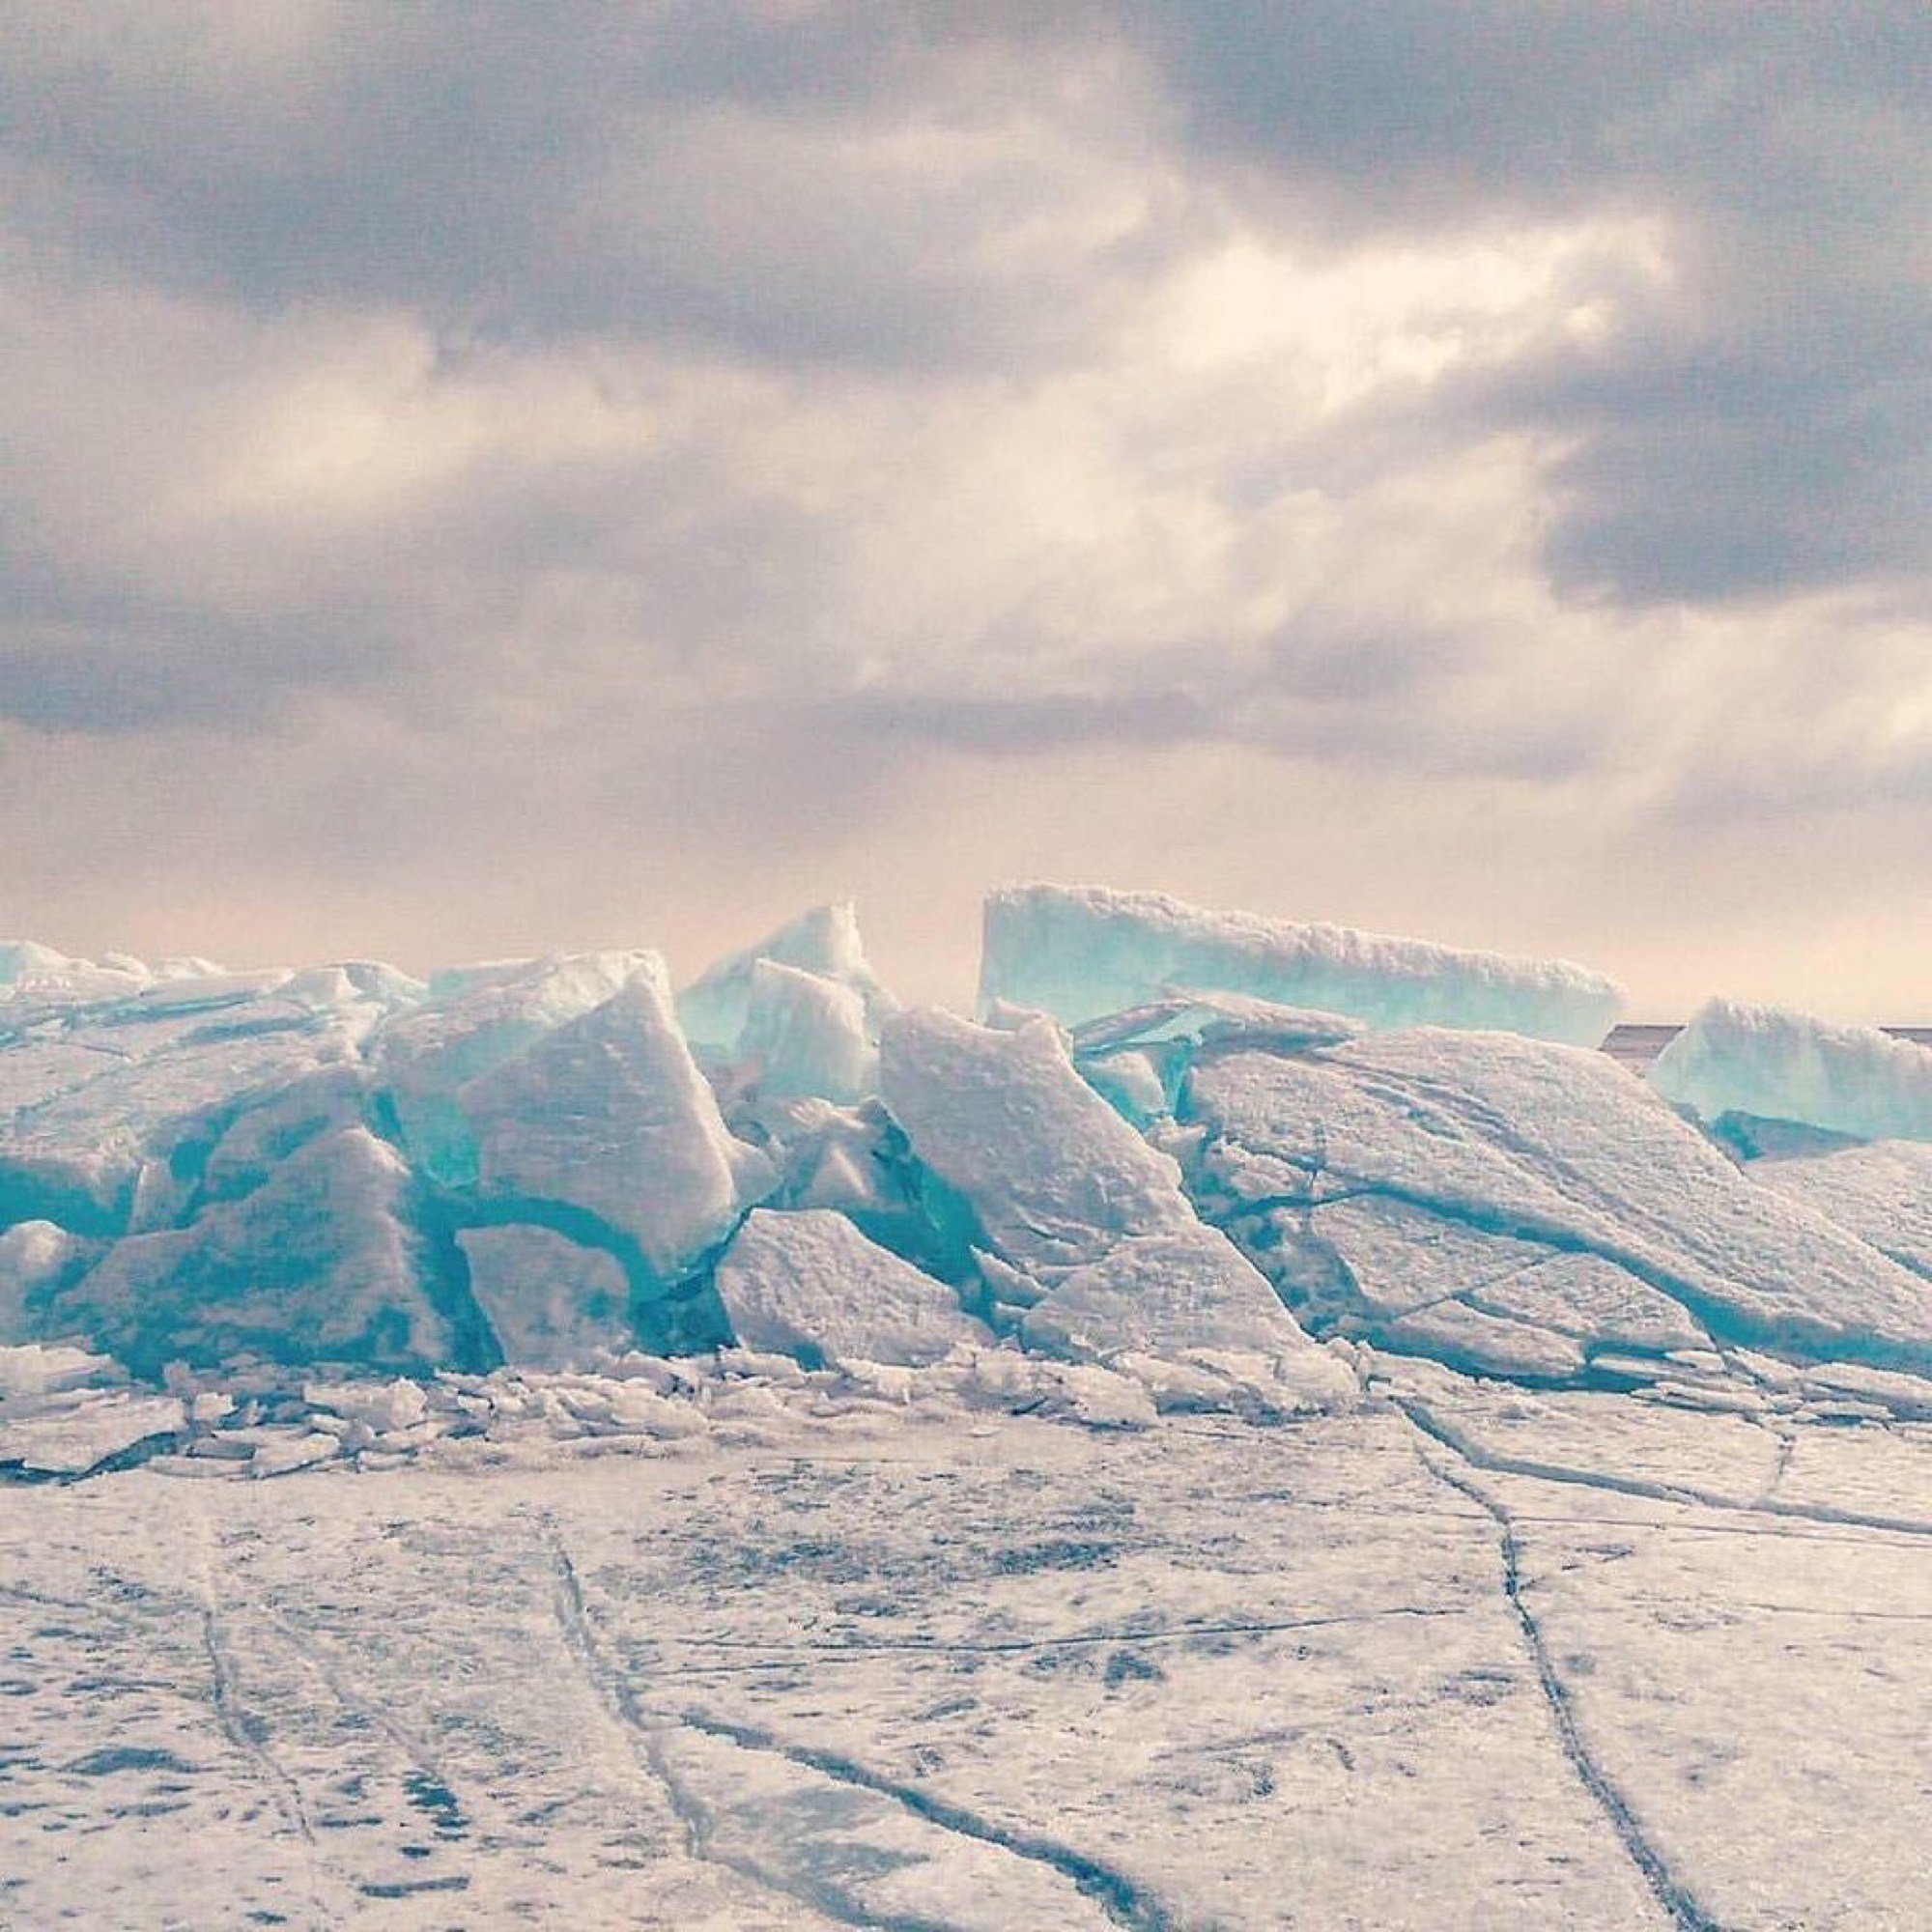 Siberia Baikal. Сибирская резиденция лед Байкал. Сибирь айс 2 фото. Фото на Байкале зимой на льду пейзаж. Сибирь айс